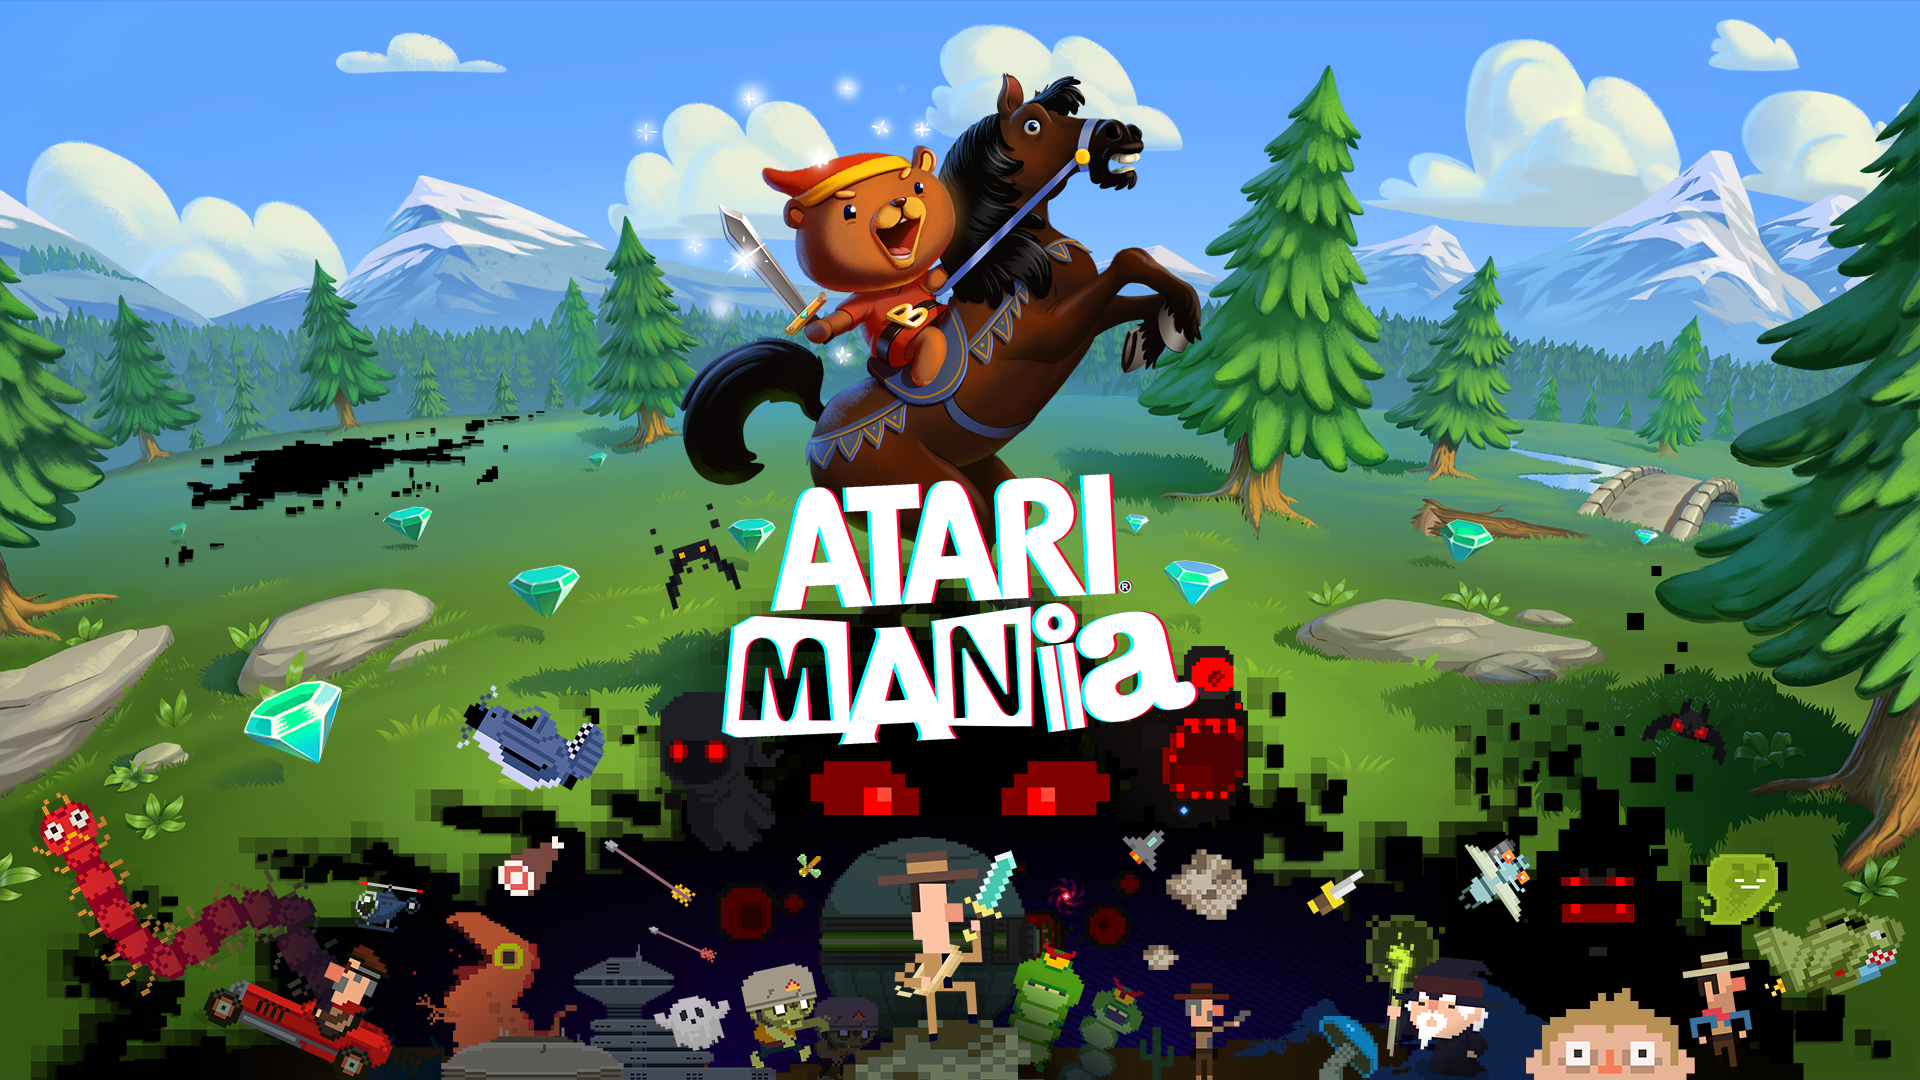 Atari Mania remixes classic games to maybe make them actually good again